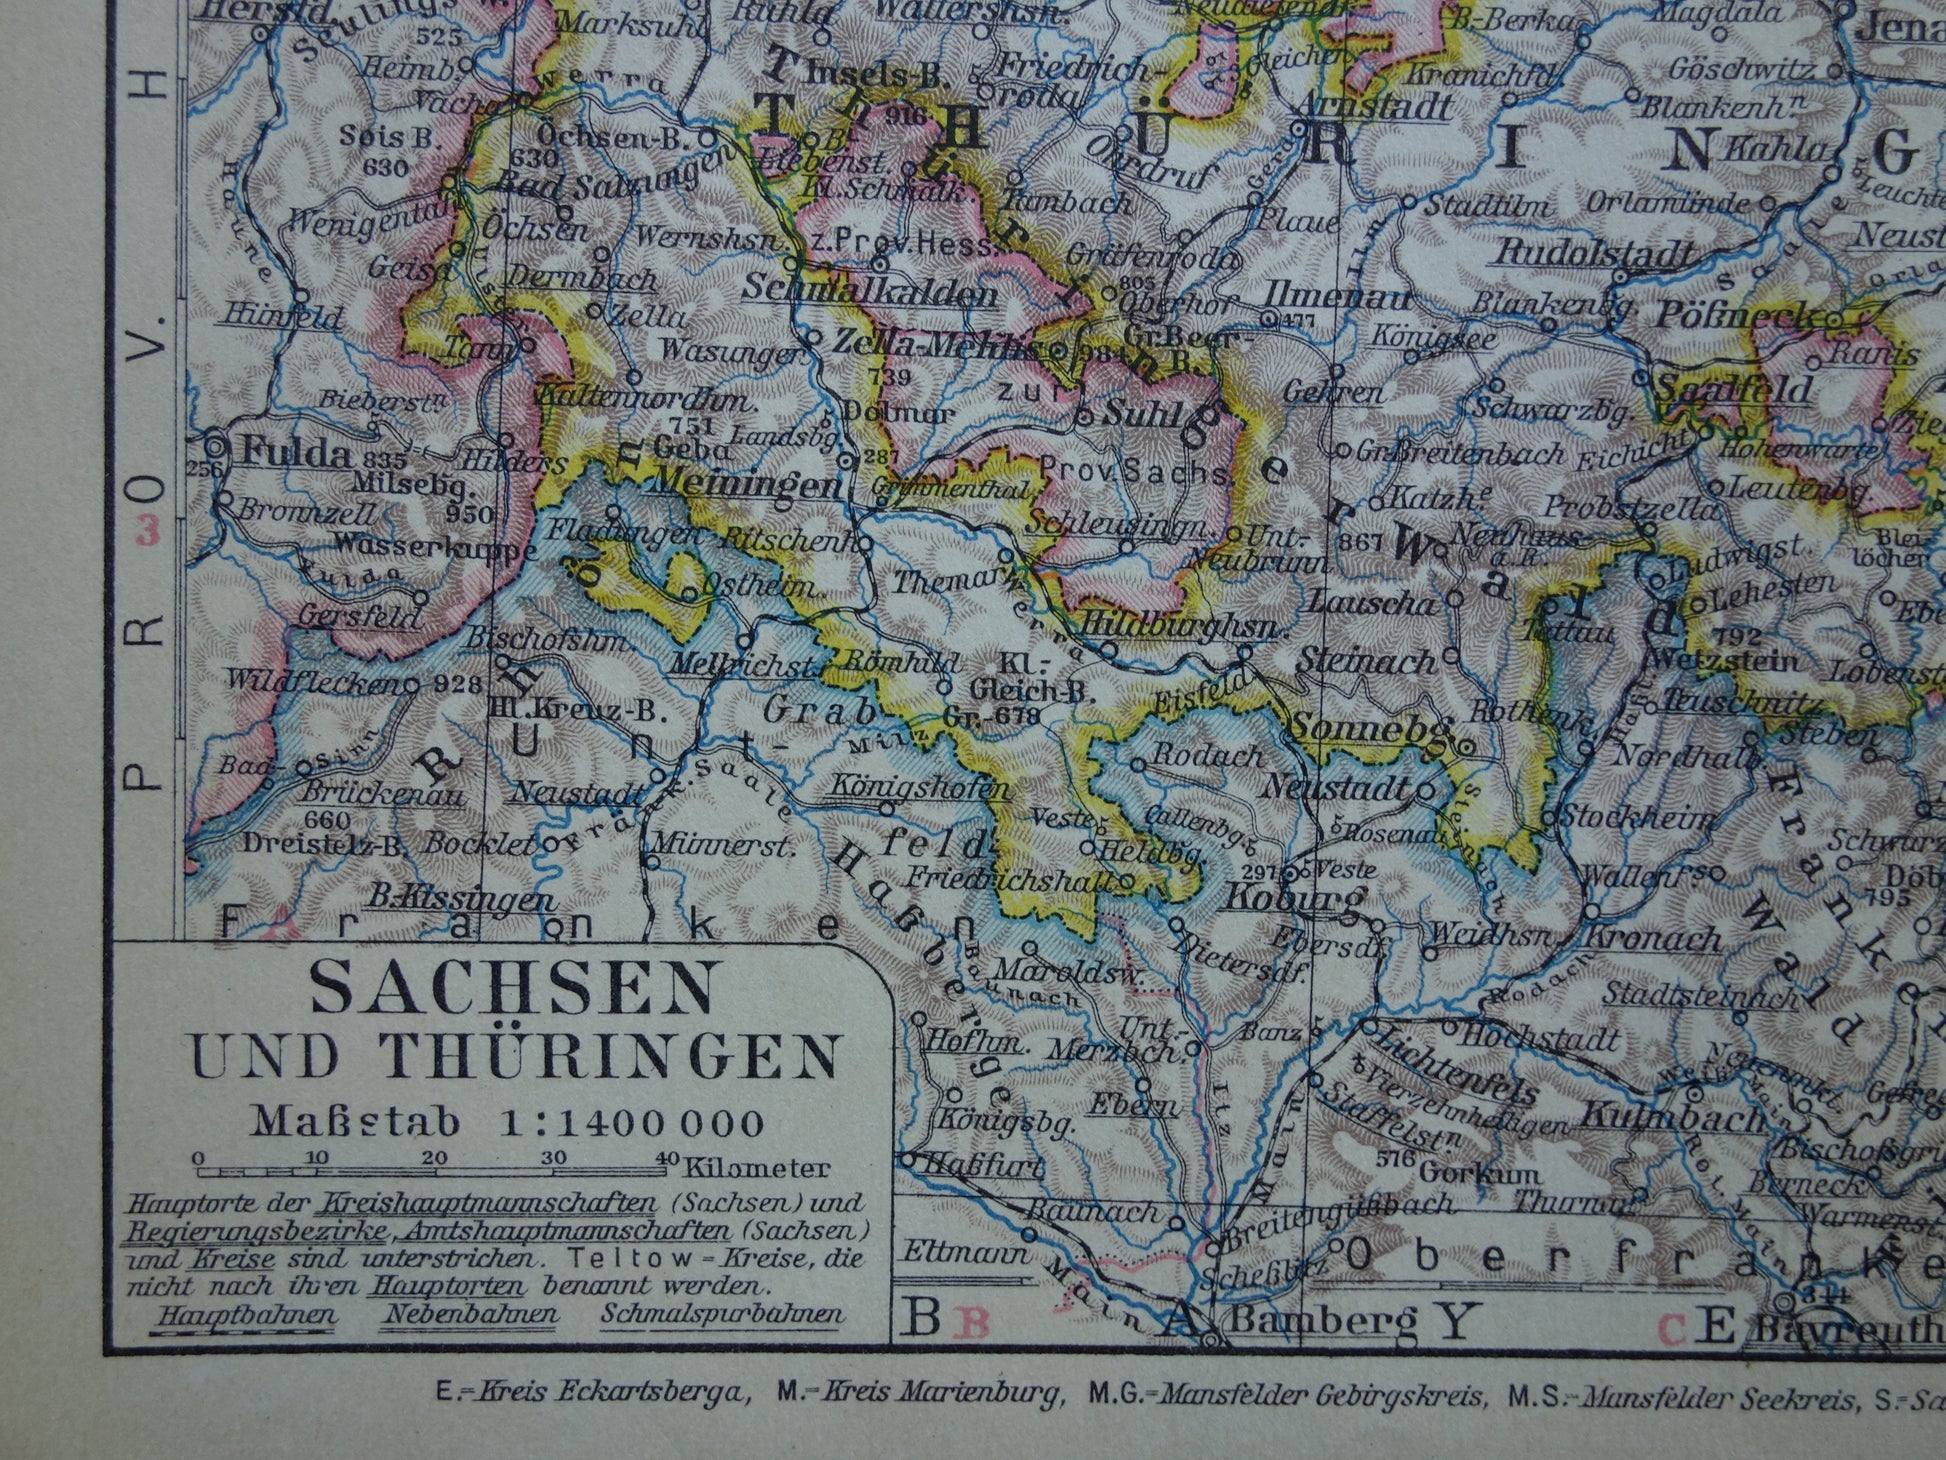 Thüringen en Saksen oude landkaart van Duitsland uit 1928 originele vintage kaart Leipzig Dresden Halle